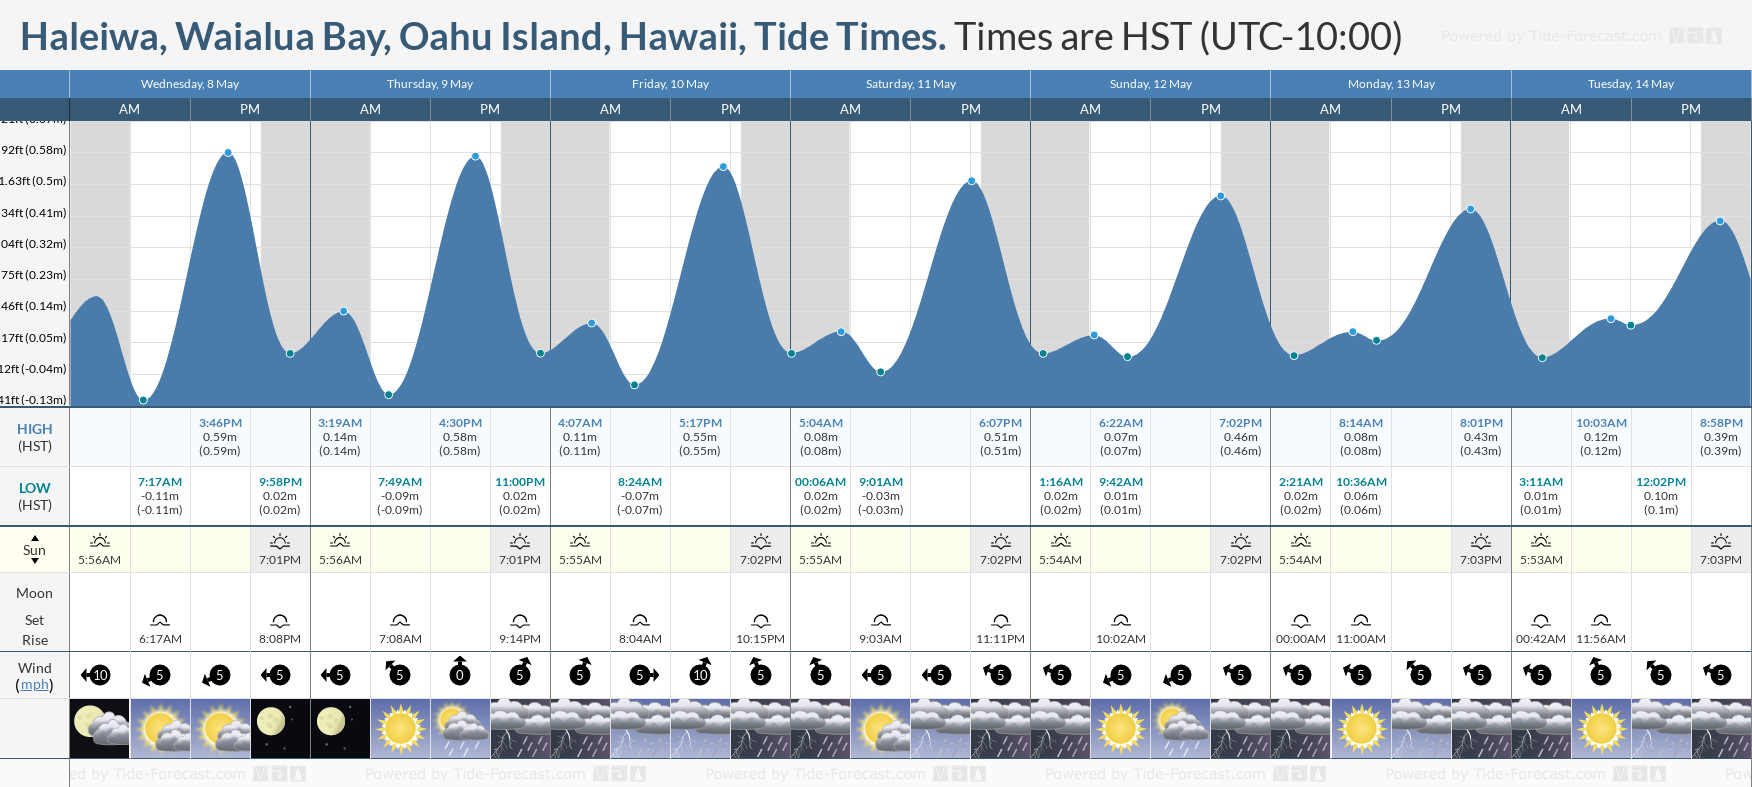 Haleiwa, Waialua Bay, Oahu Island, Hawaii Tide Chart including high and low tide tide times for the next 7 days